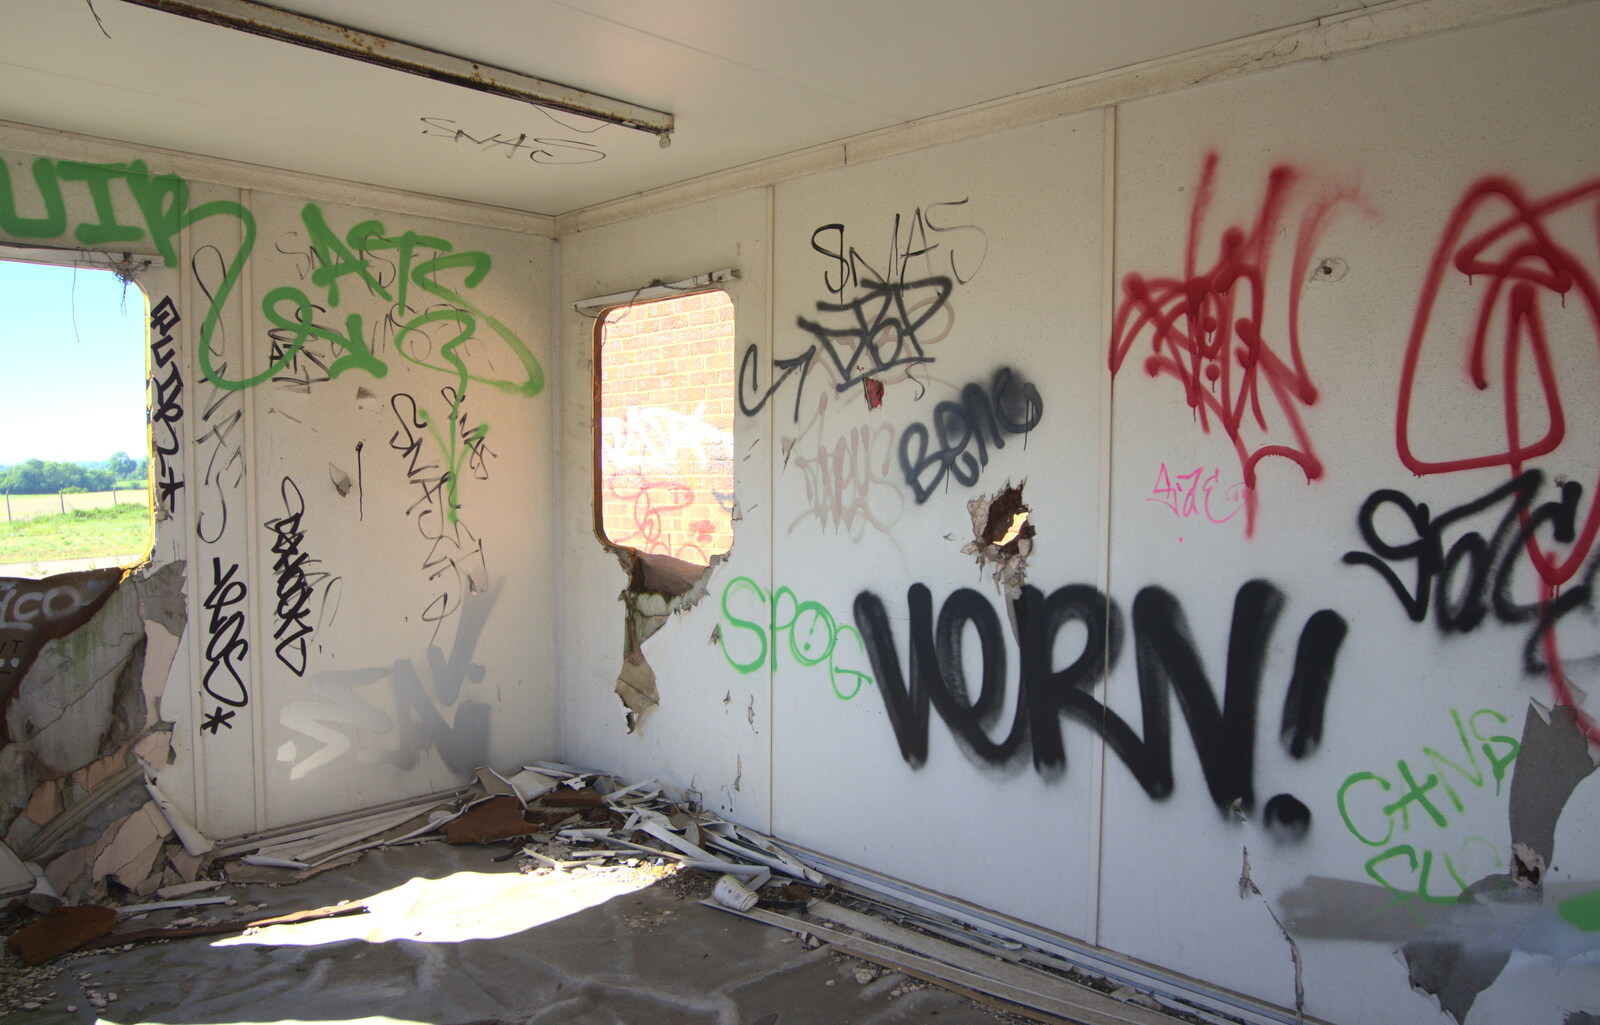 Inside the graffiti portakabin from Rural Norfolk Dereliction and Graffiti, Ipswich Road, Norwich - 27th May 2012